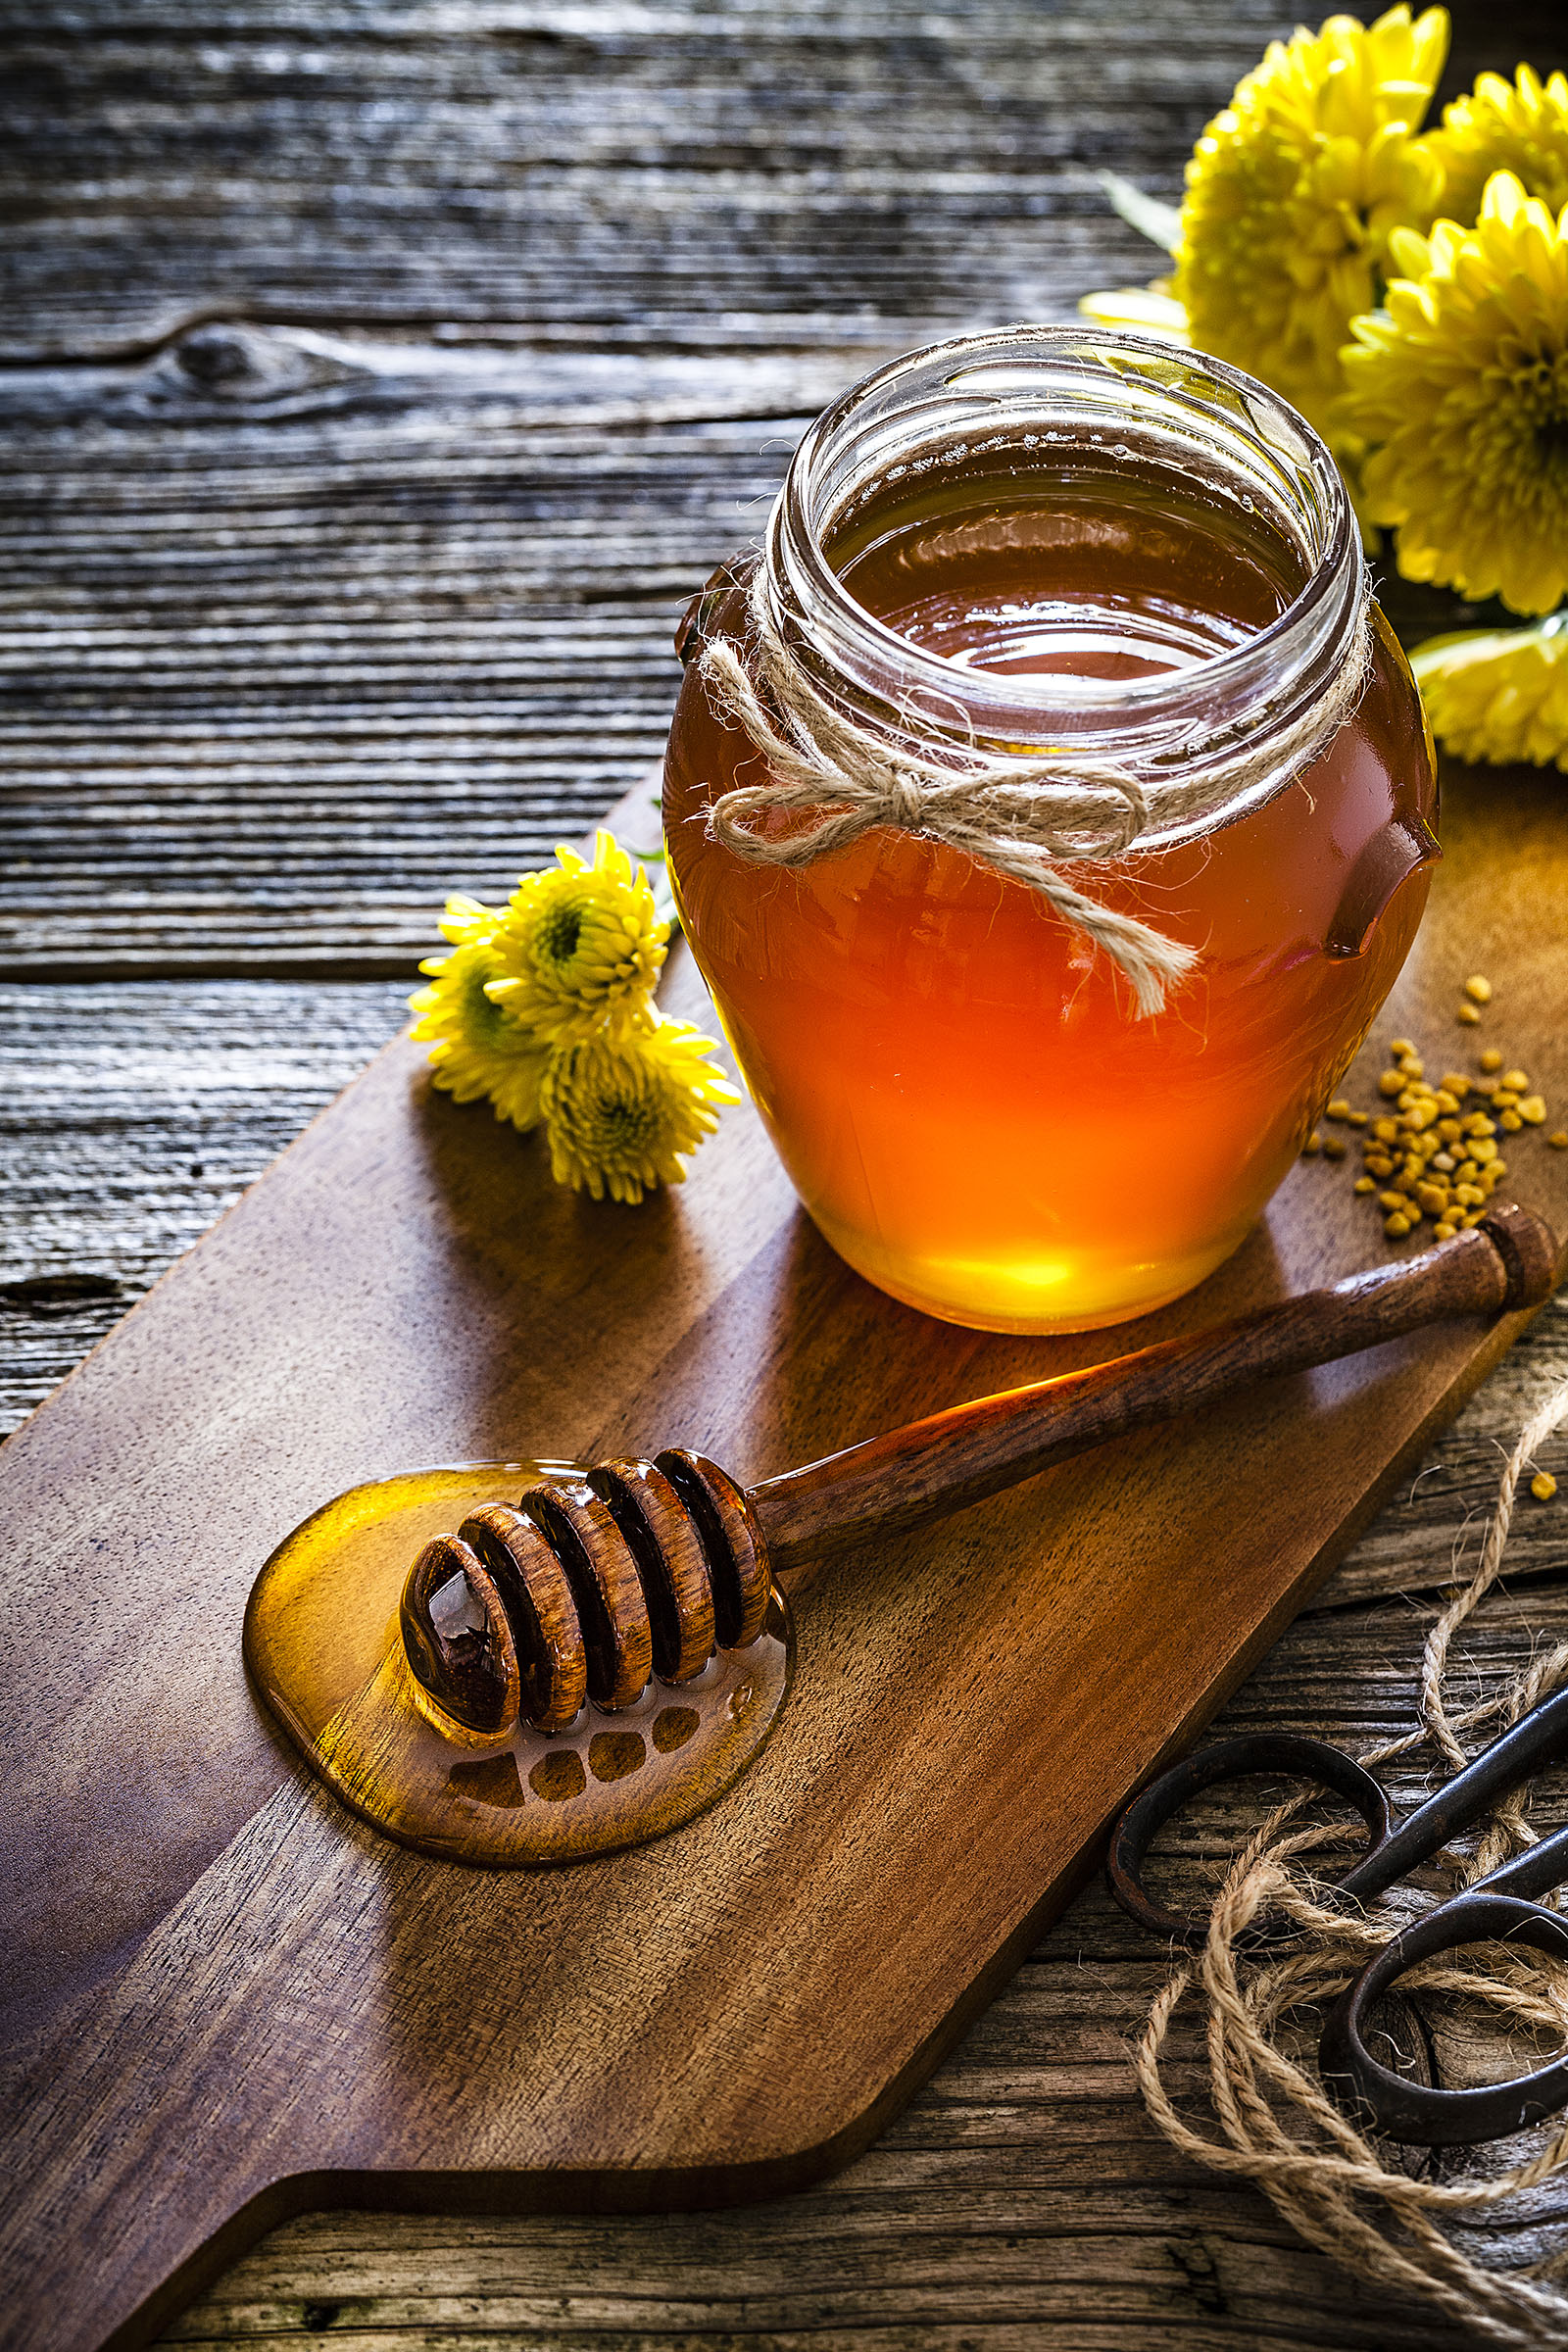 manuka honey benefits for skin